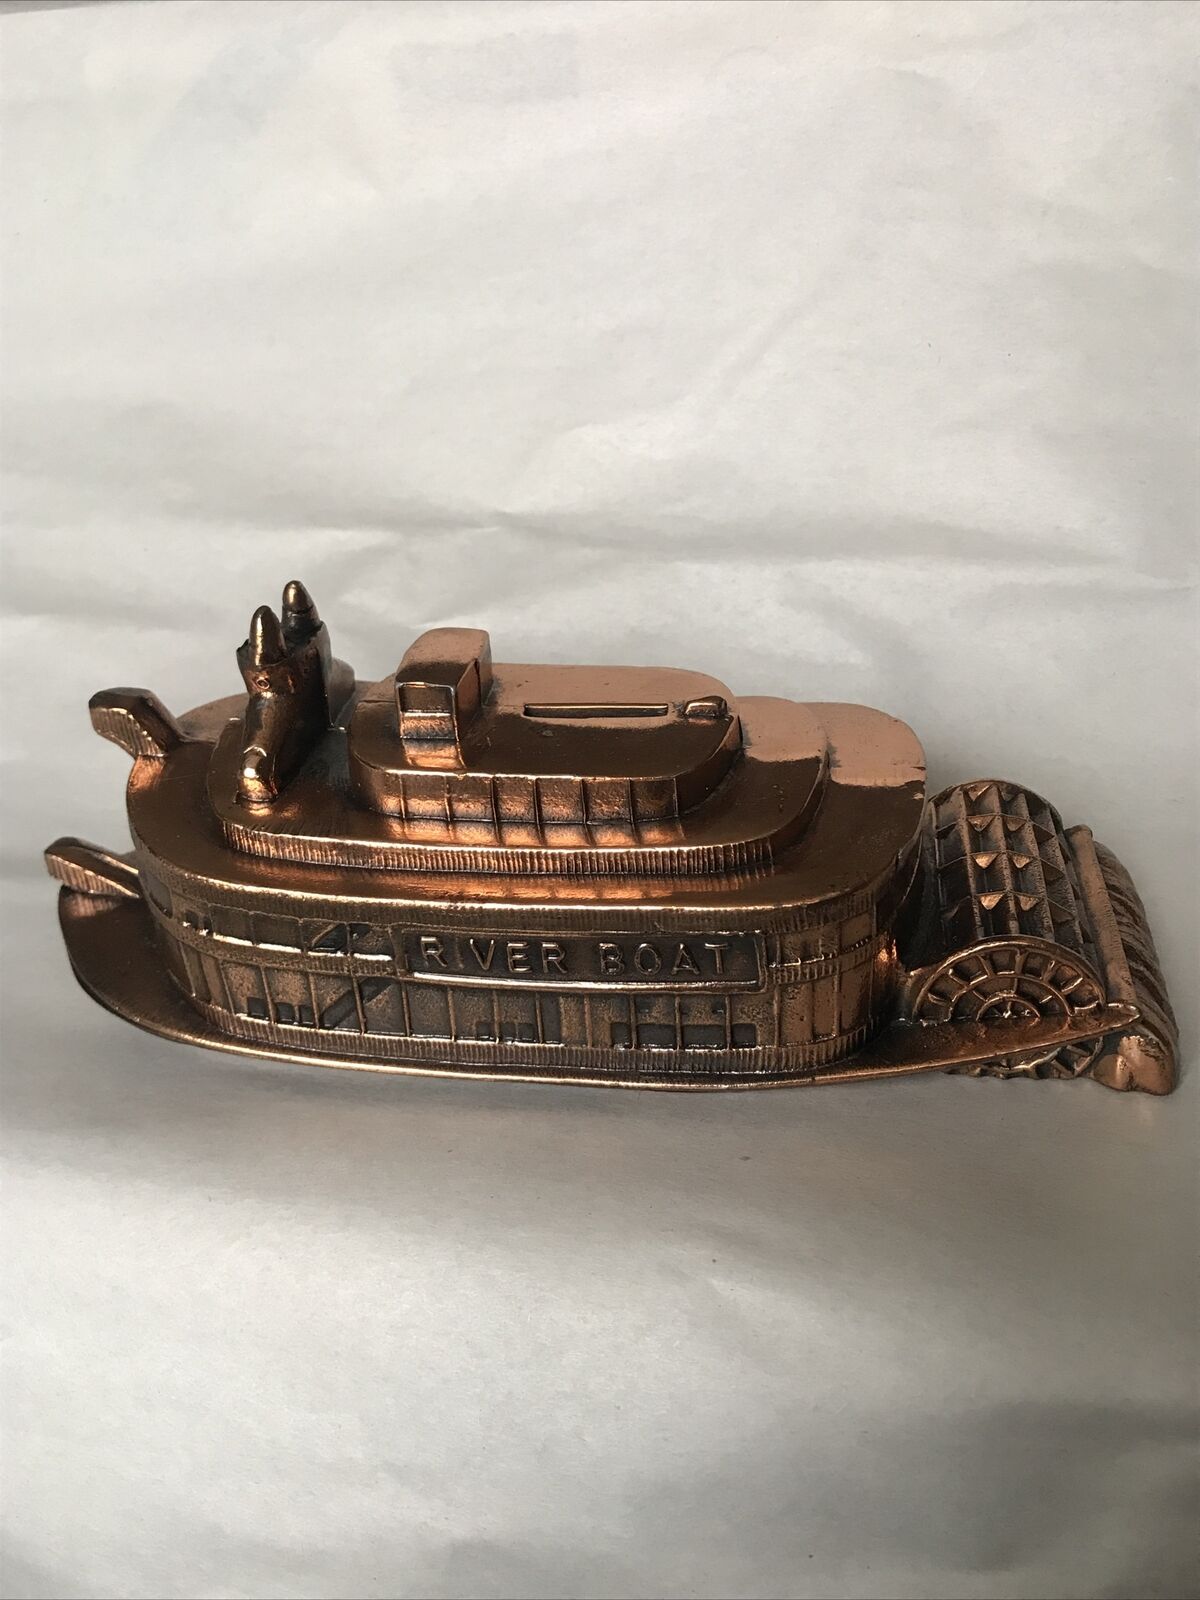 Vintage River Boat Coin Bank Steam Boat